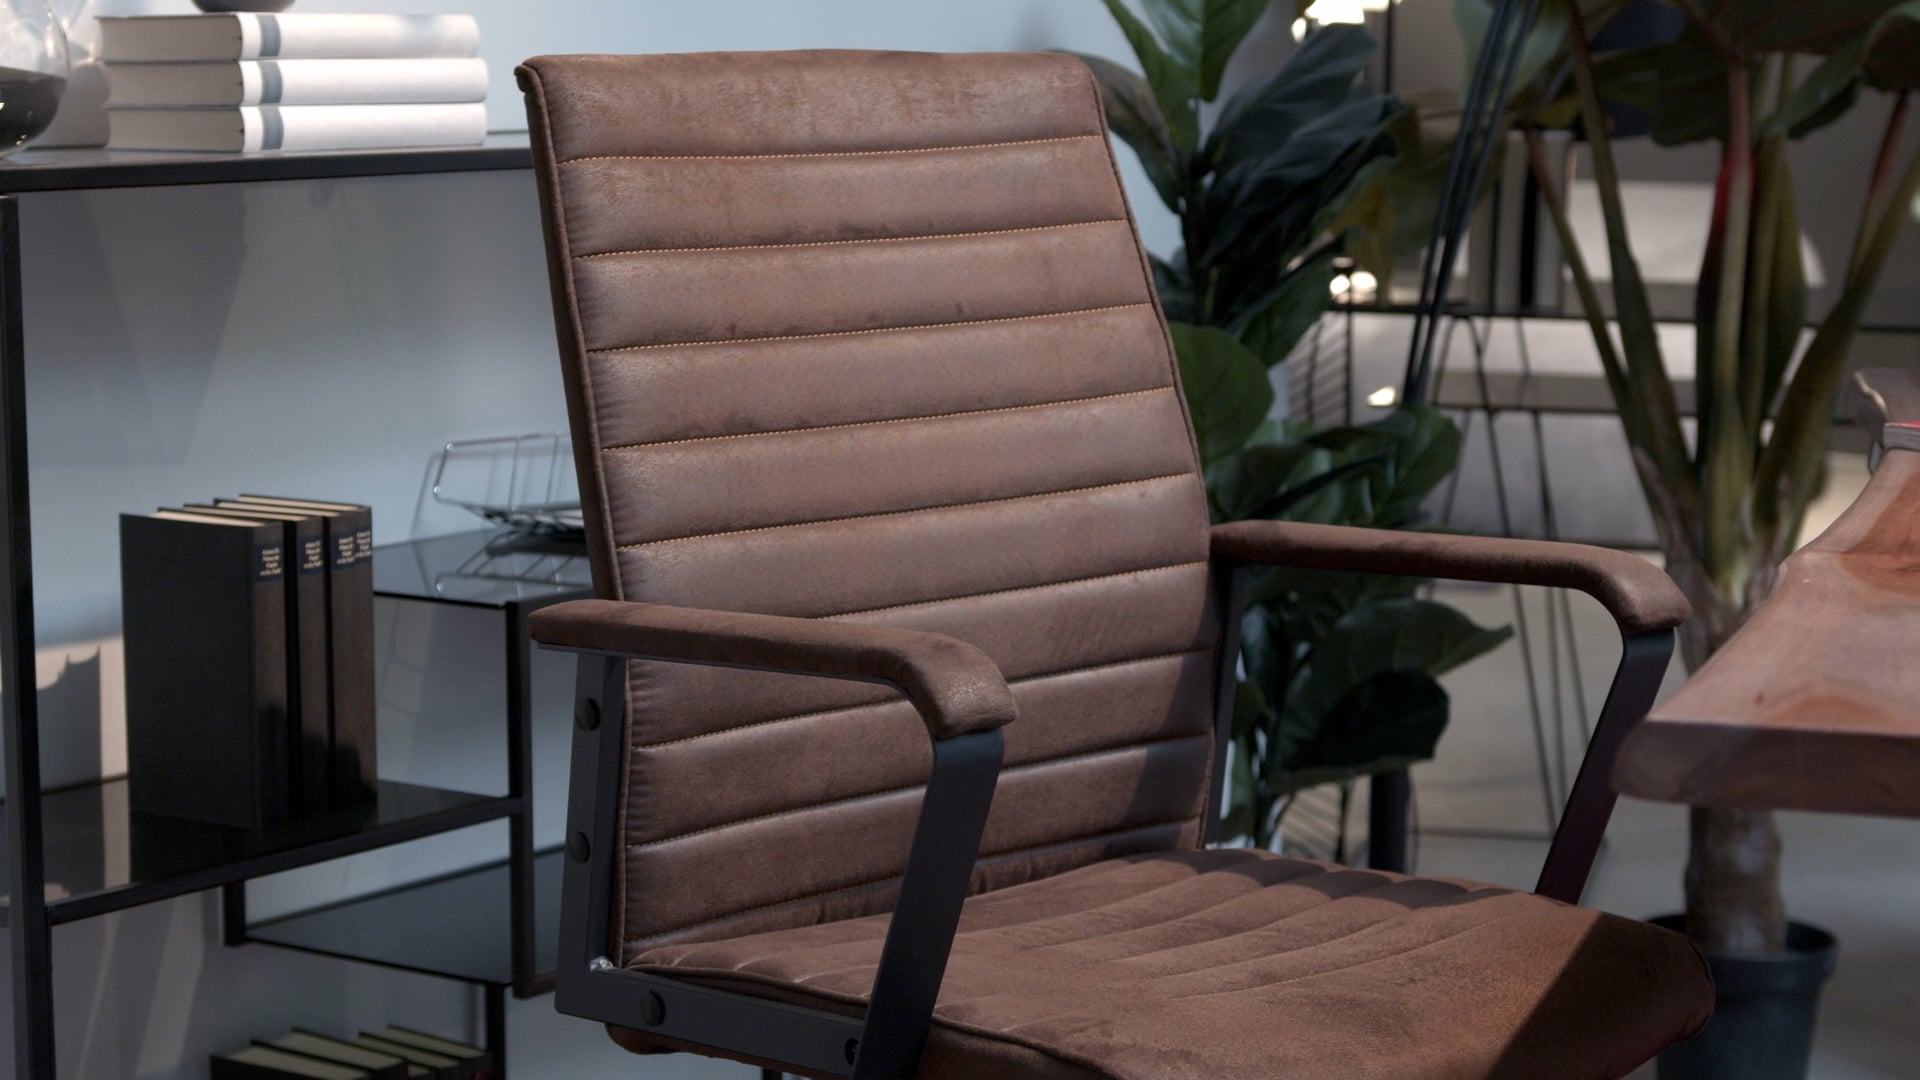 Chaise de bureau haute contemporaine marron - Labora - Kare Design